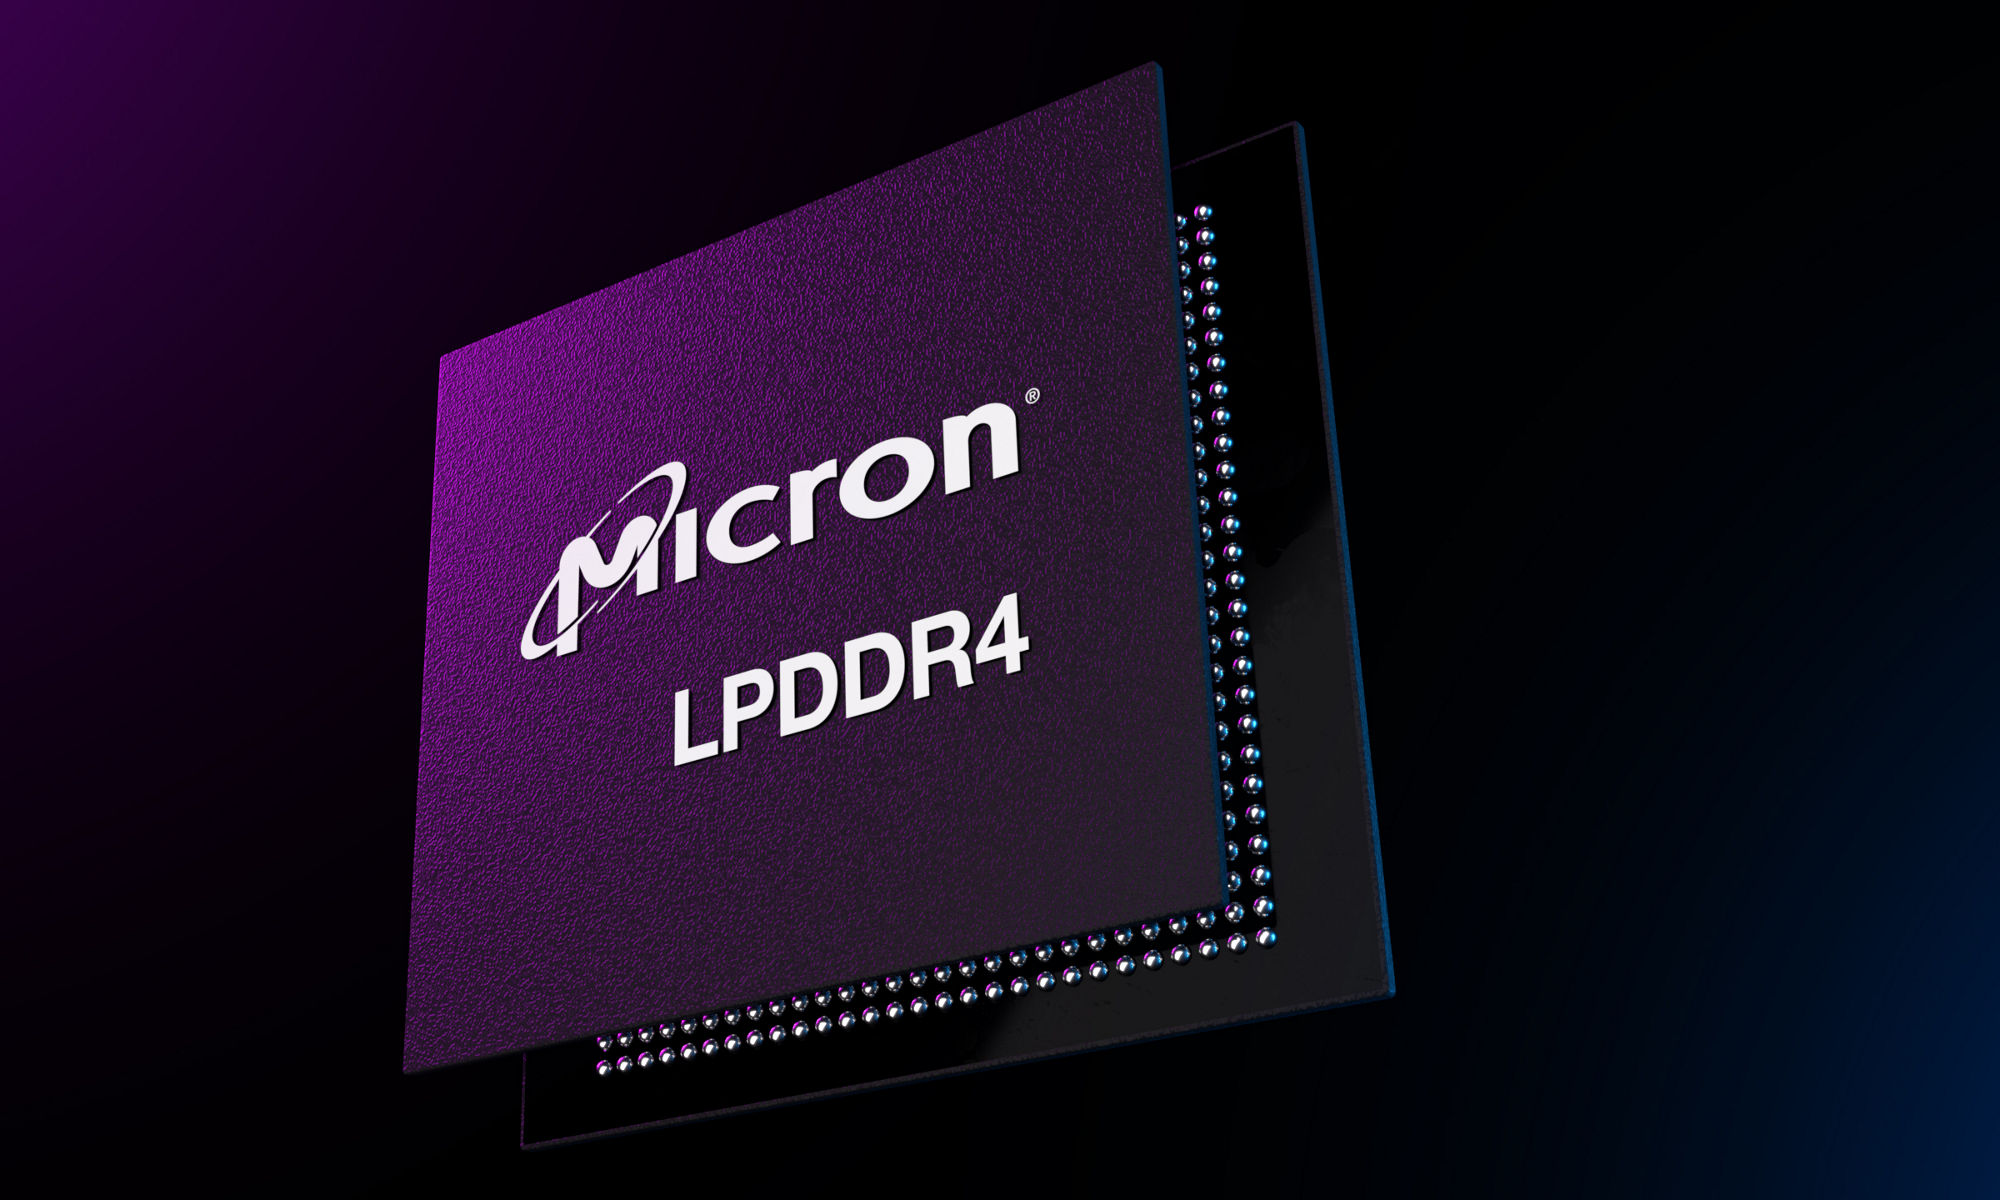 Micron LPDDR4